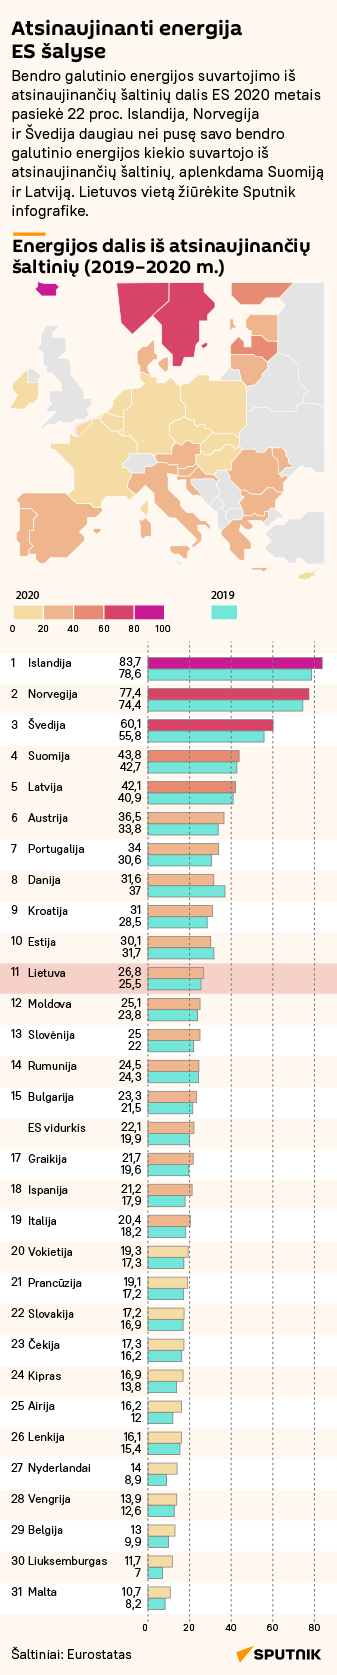 Atsinaujinanti energija ES šalyse - Sputnik Lietuva